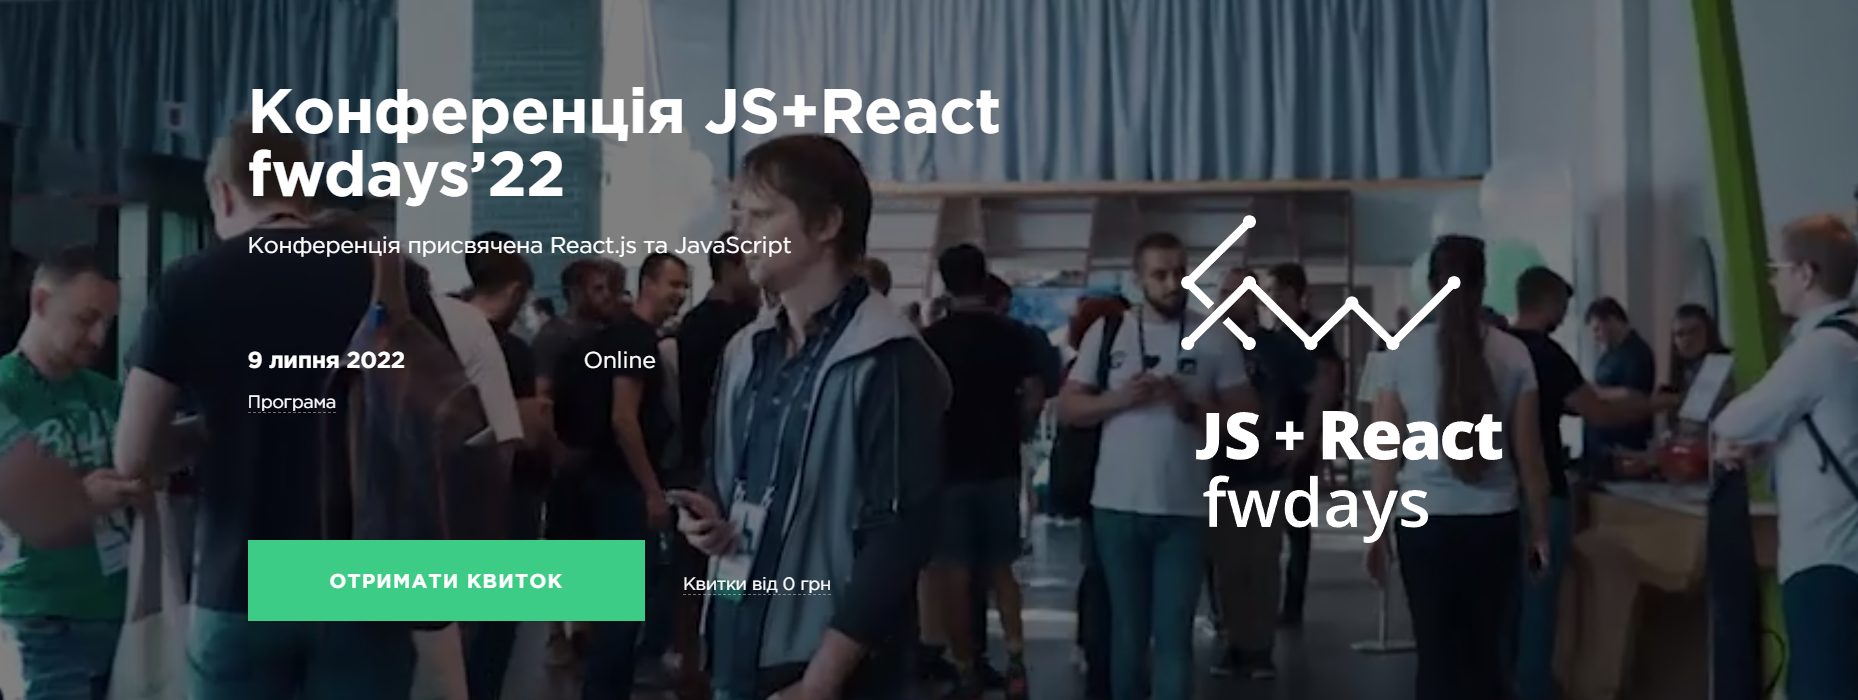 JS+React fwdays22